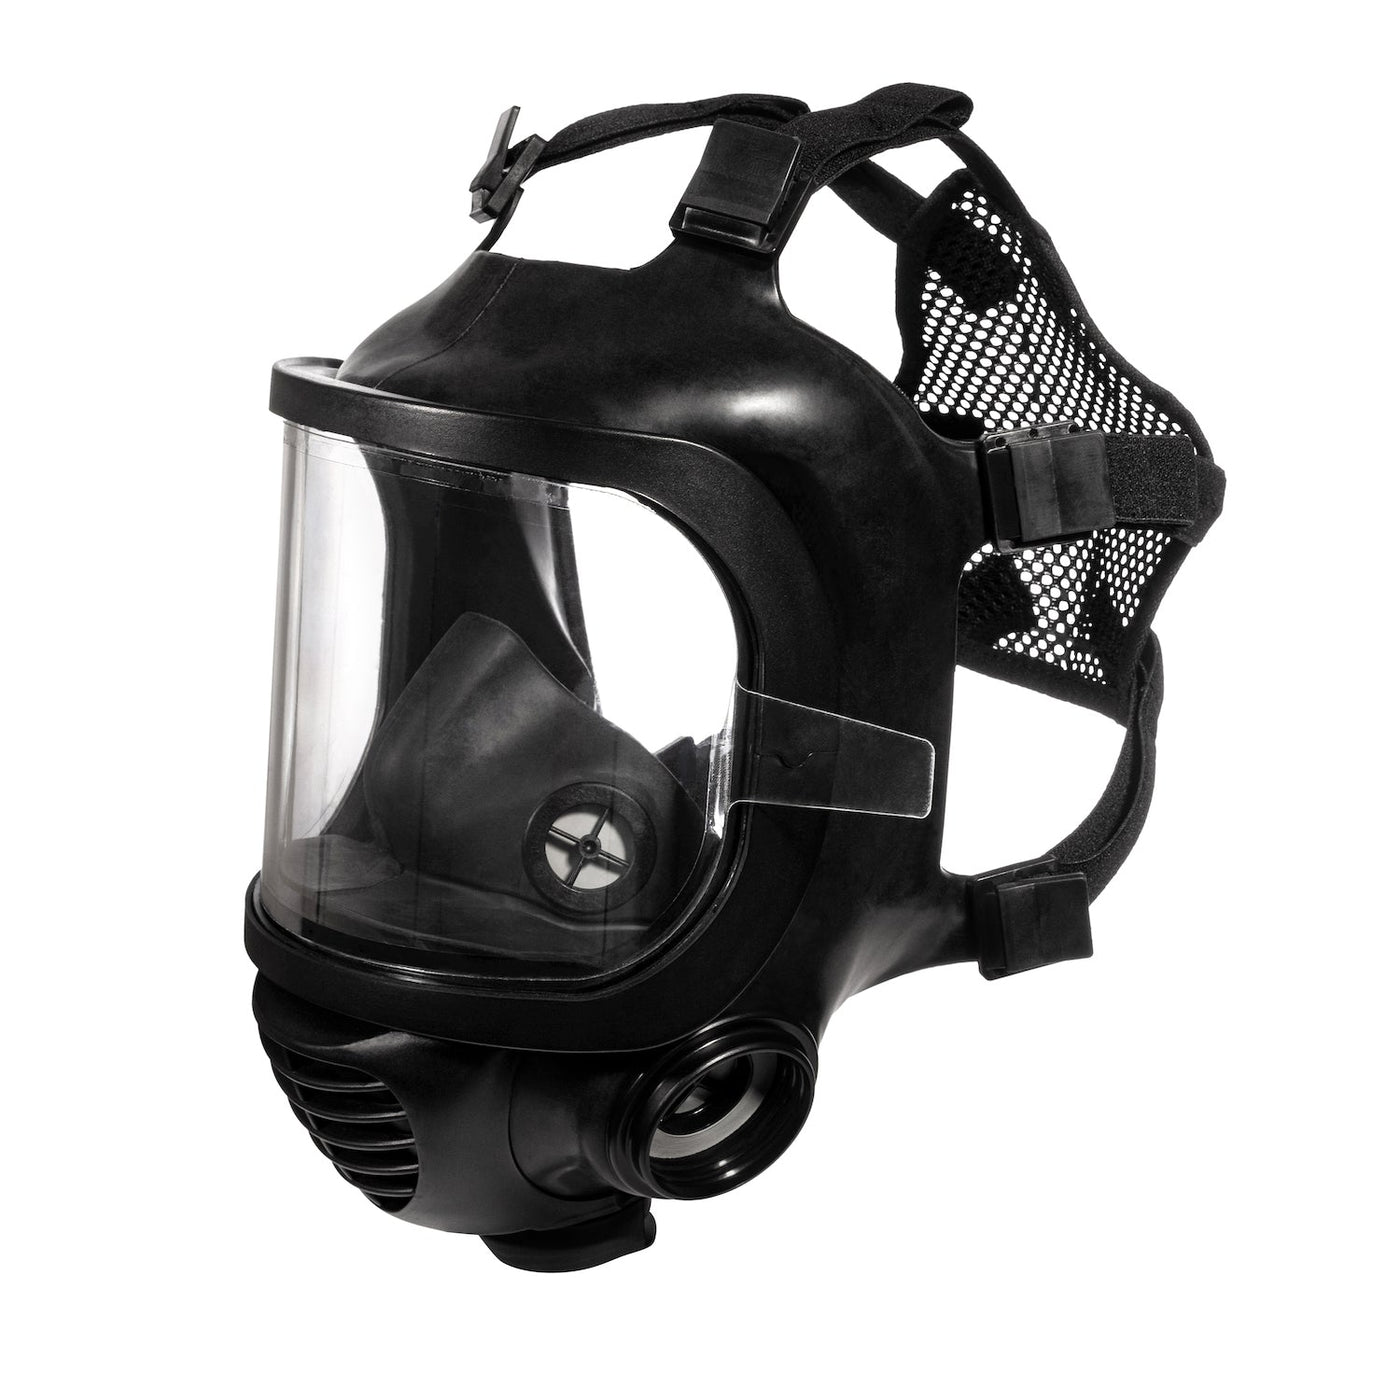 Single layer transparent PROFILM gas mask visor protector three quarter view